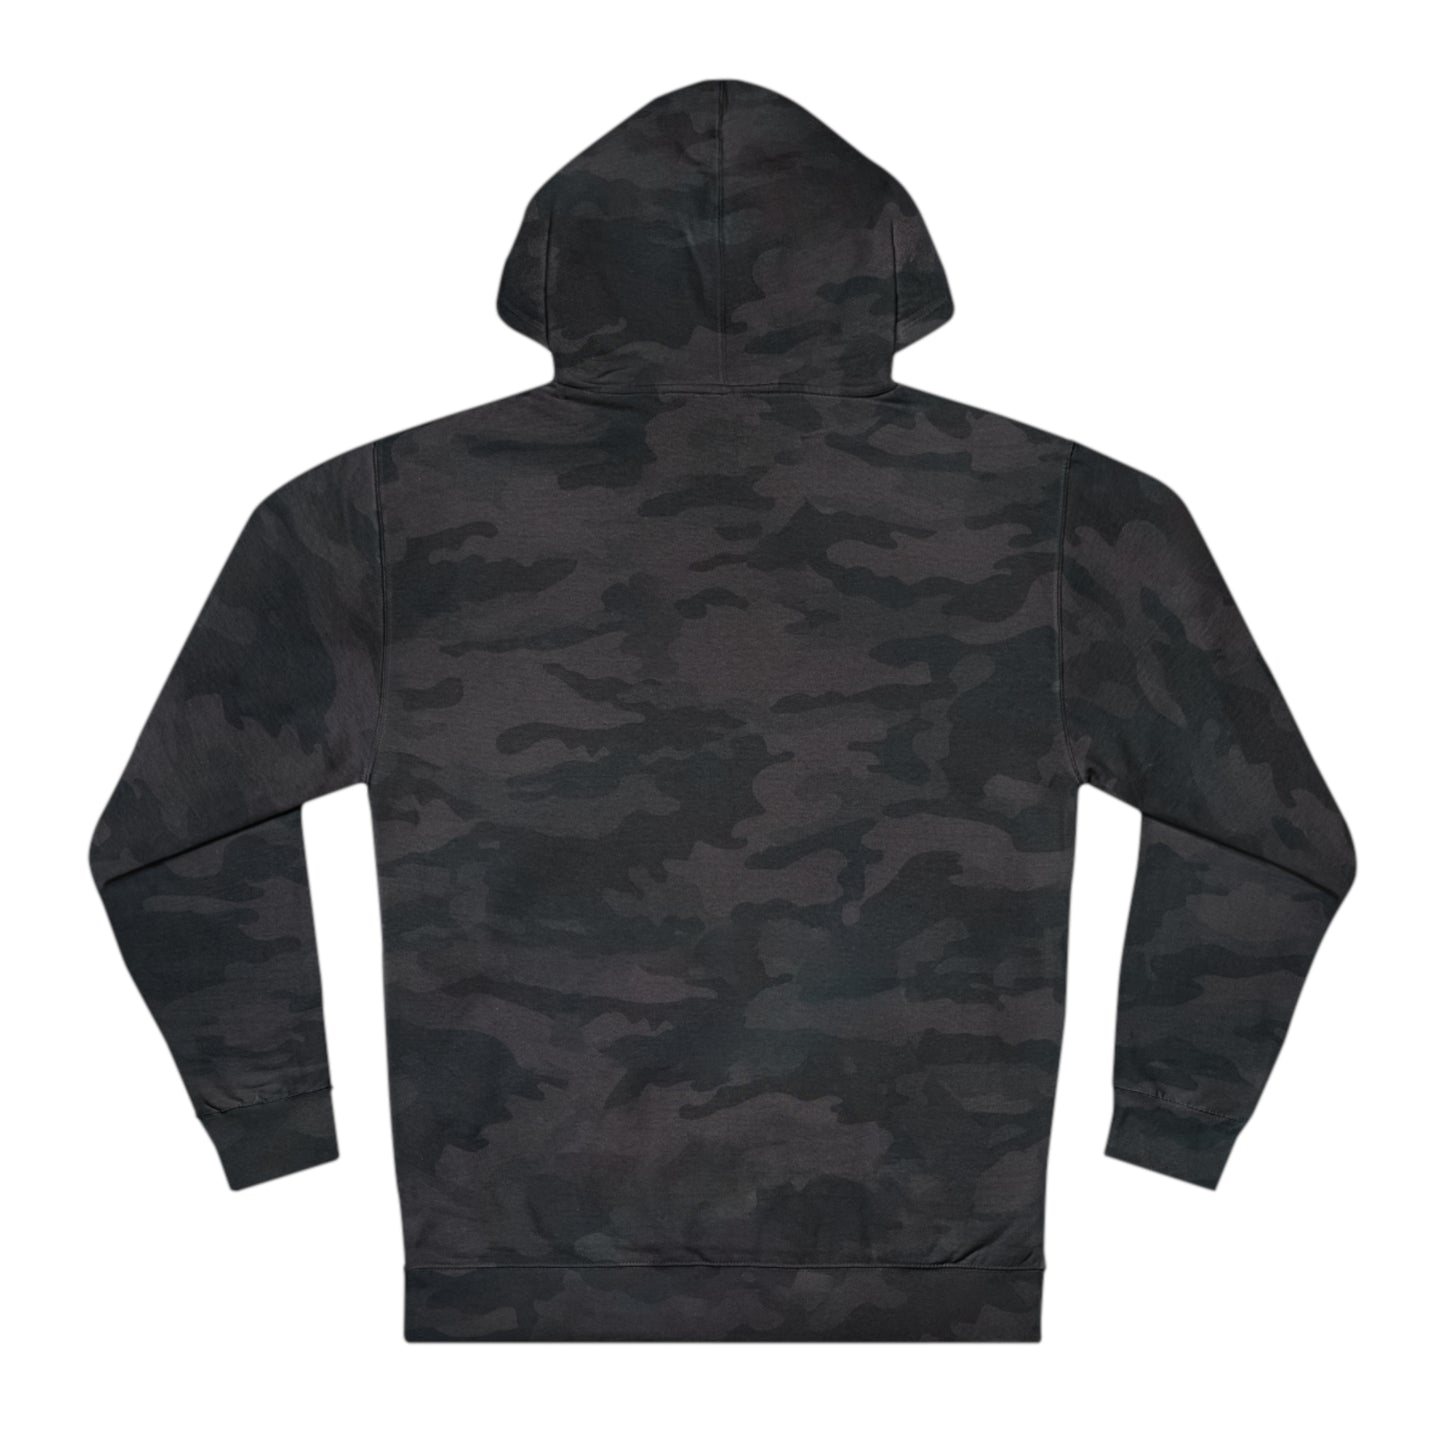 Unisex hooded sweatshirt hoodie in camo